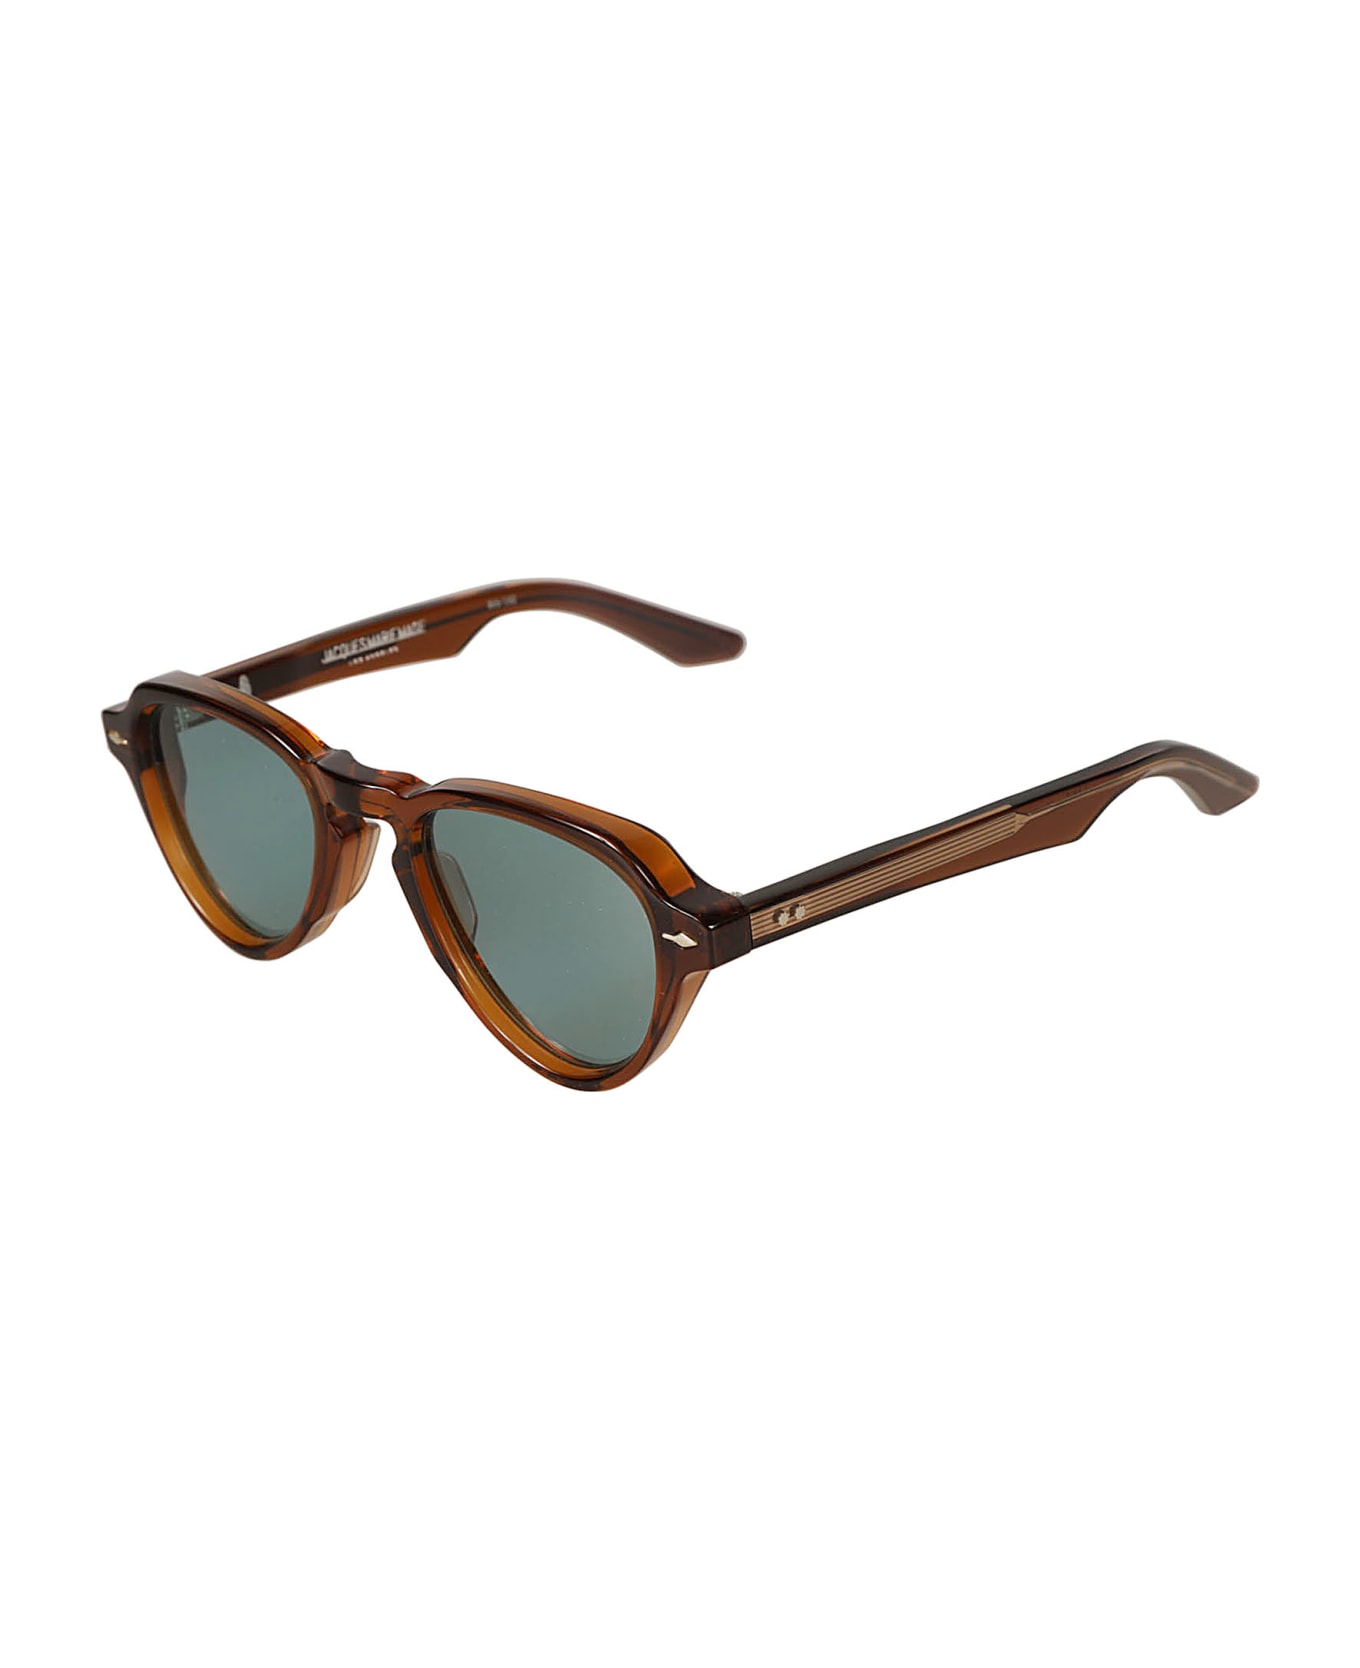 Jacques Marie Mage Hickory Sunglasses Sunglasses - marrone-oro サングラス